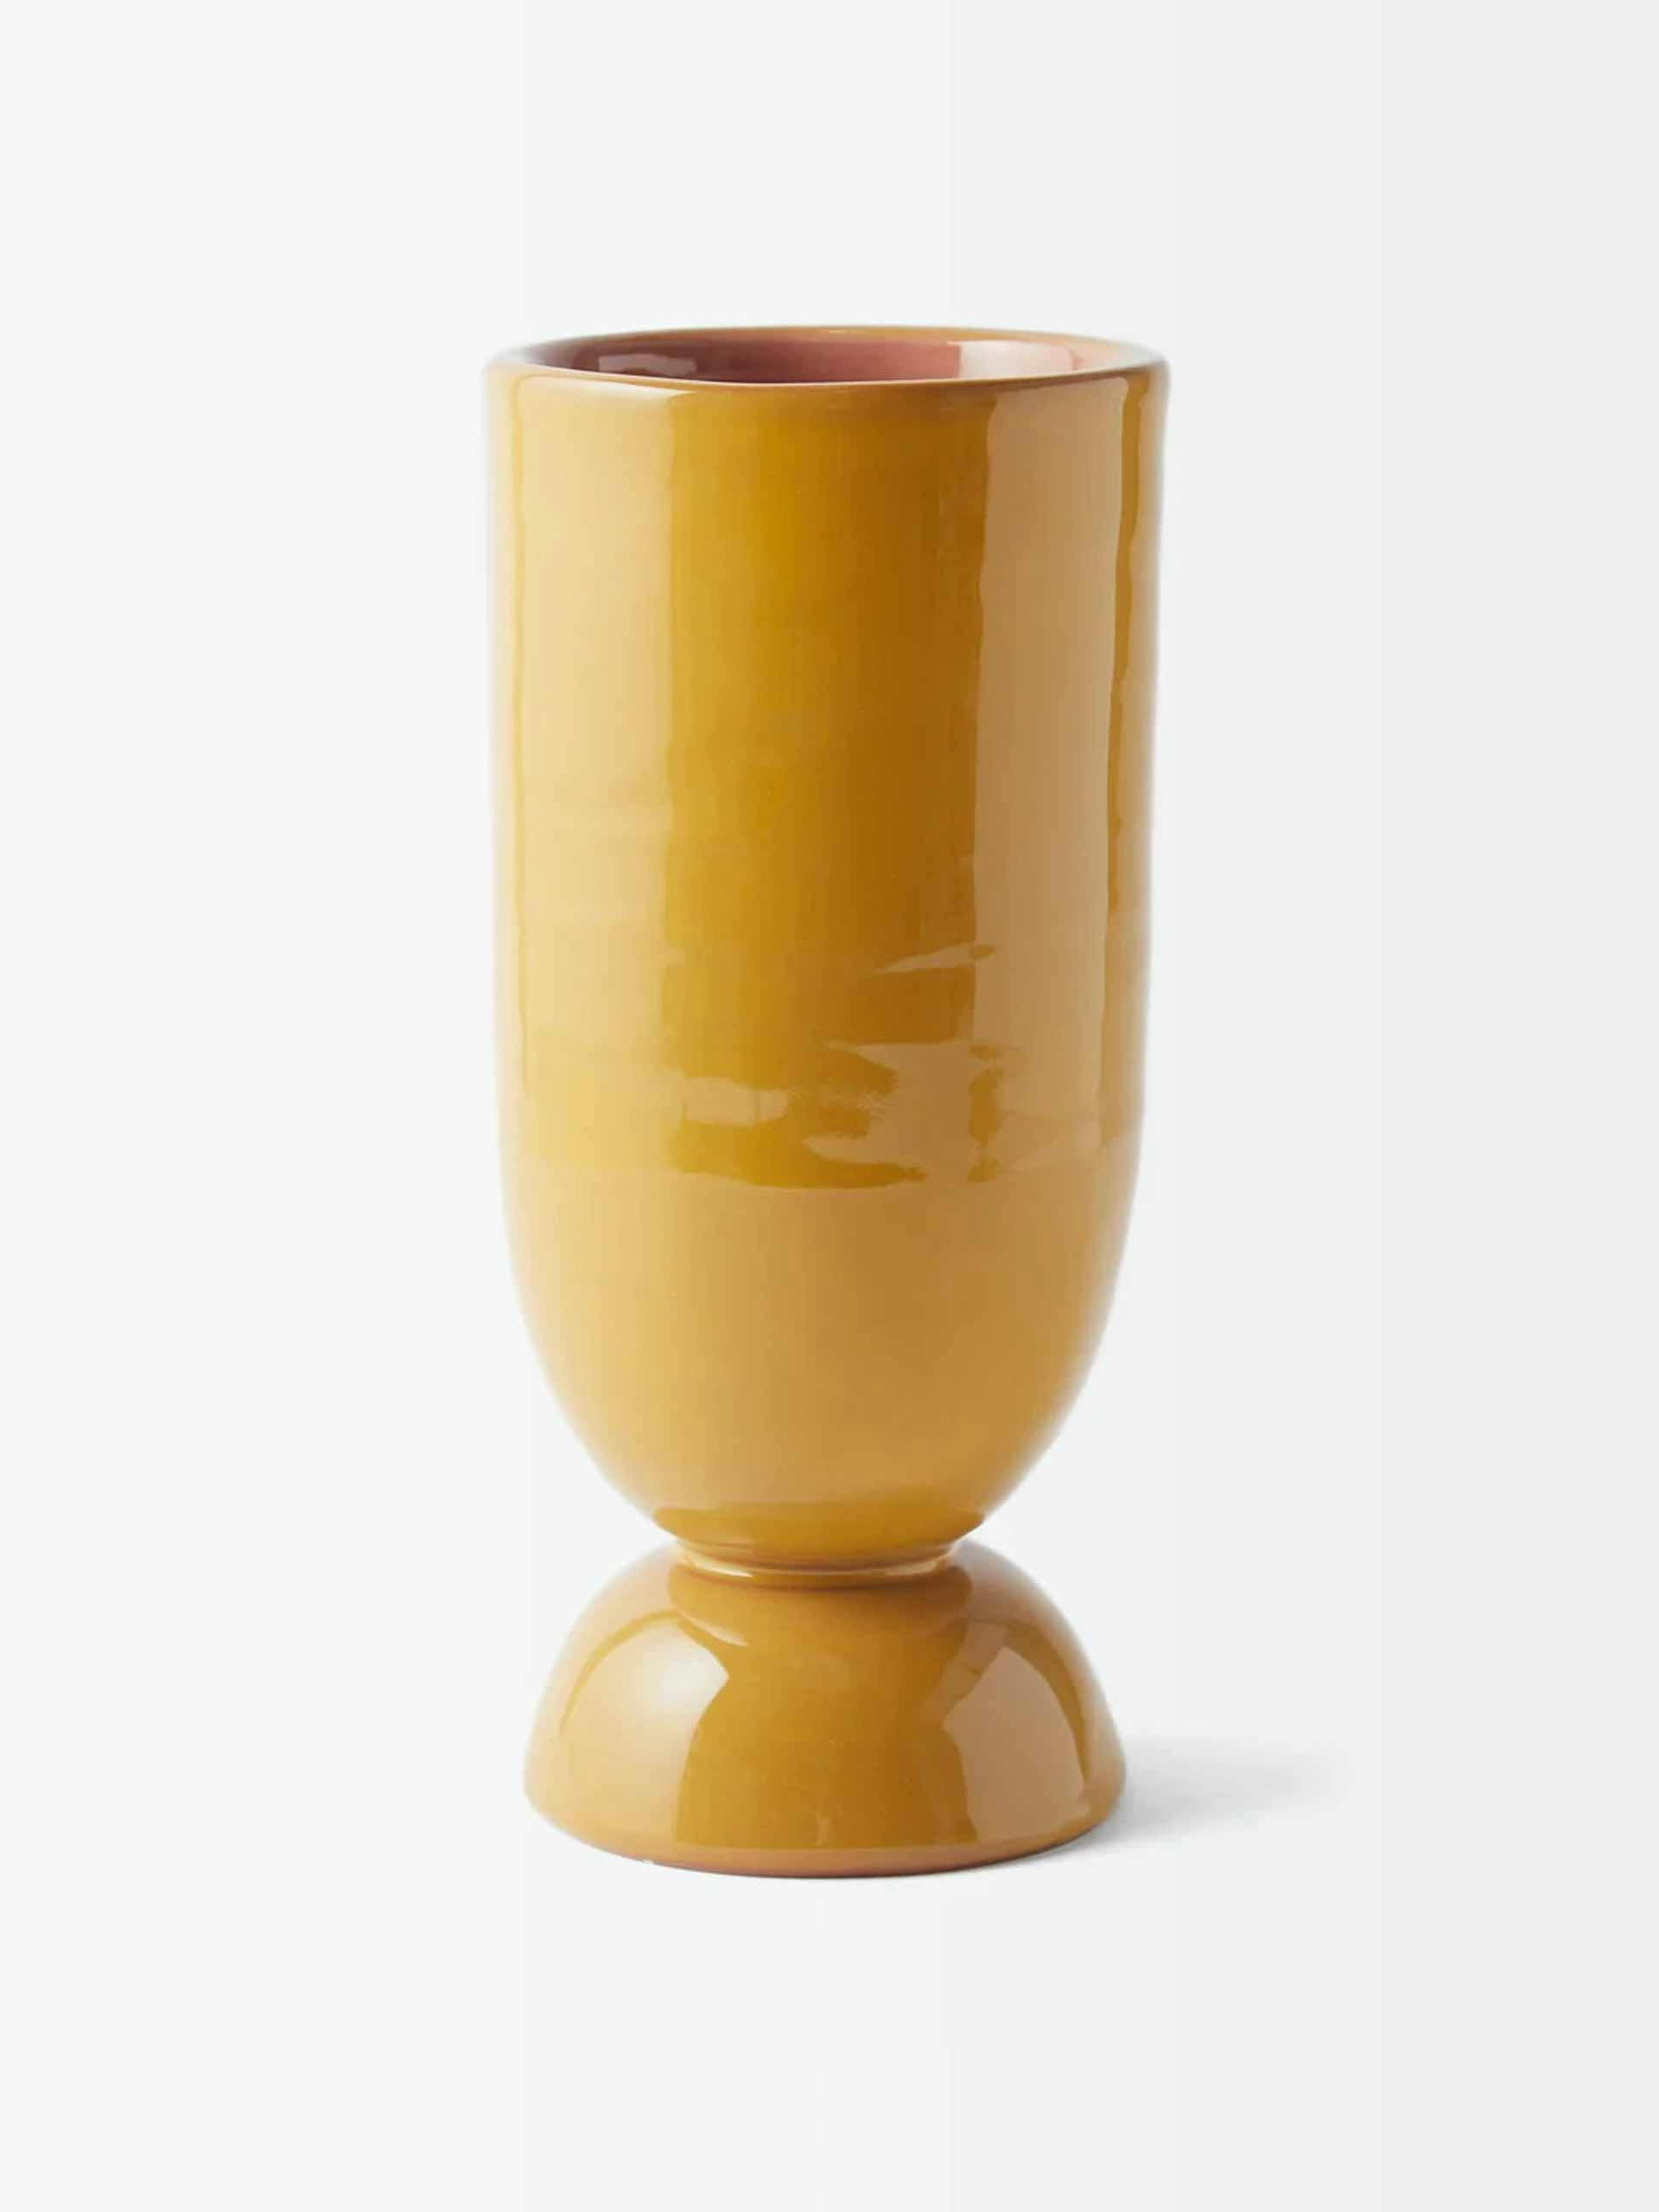 Mustard ceramic vase